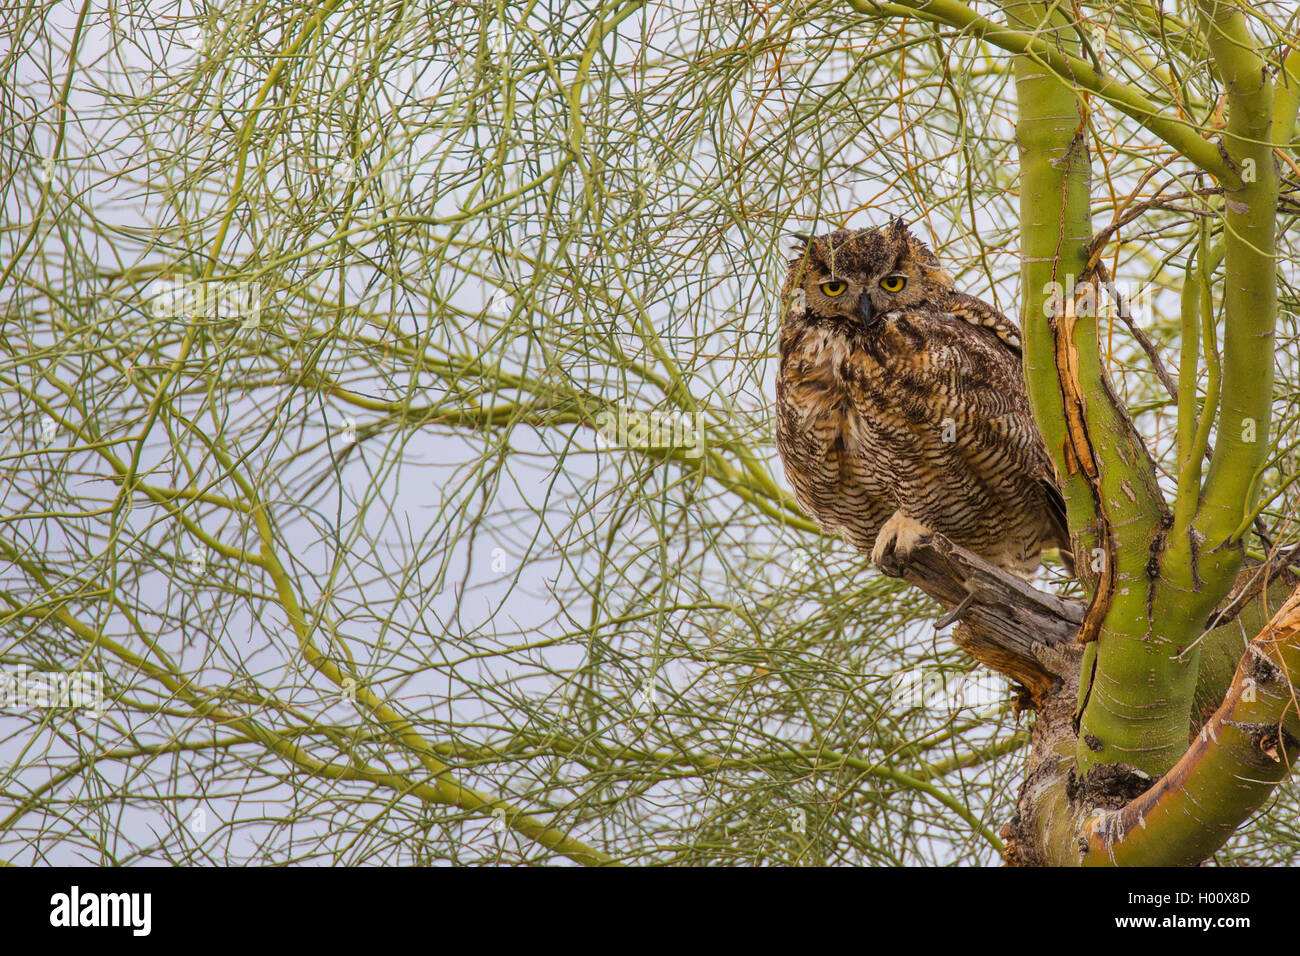 great horned owl (Bubo virginianus), sittin on a tree after rain shower, USA, Arizona, Phoenix Stock Photo